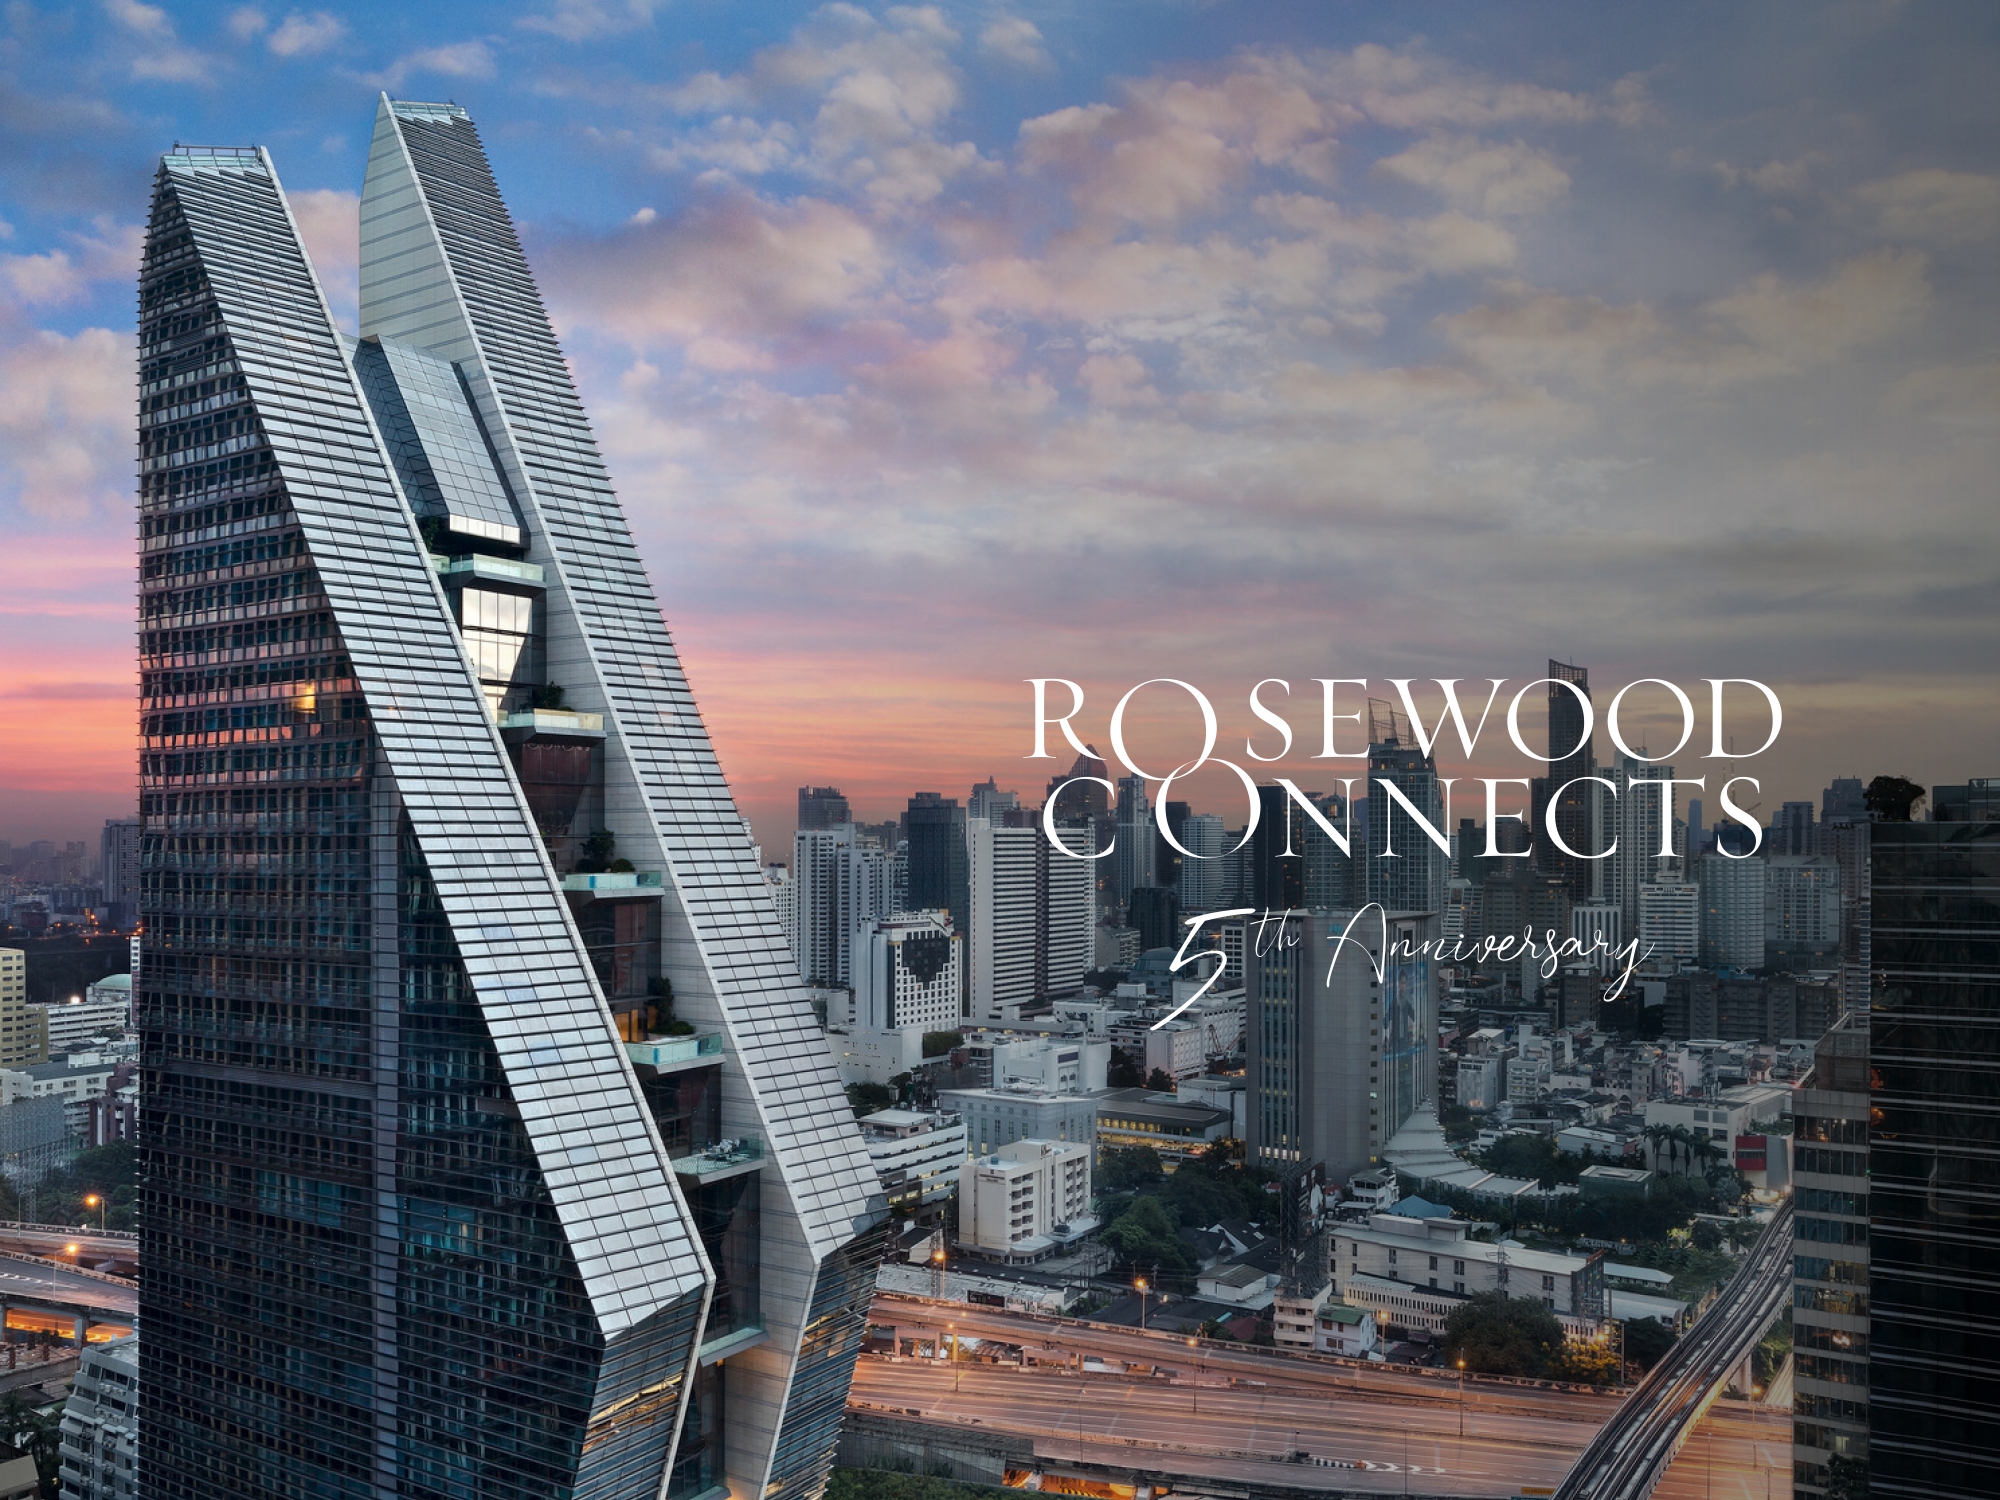 Rosewood Bangkok 5th Anniversary Celebrations